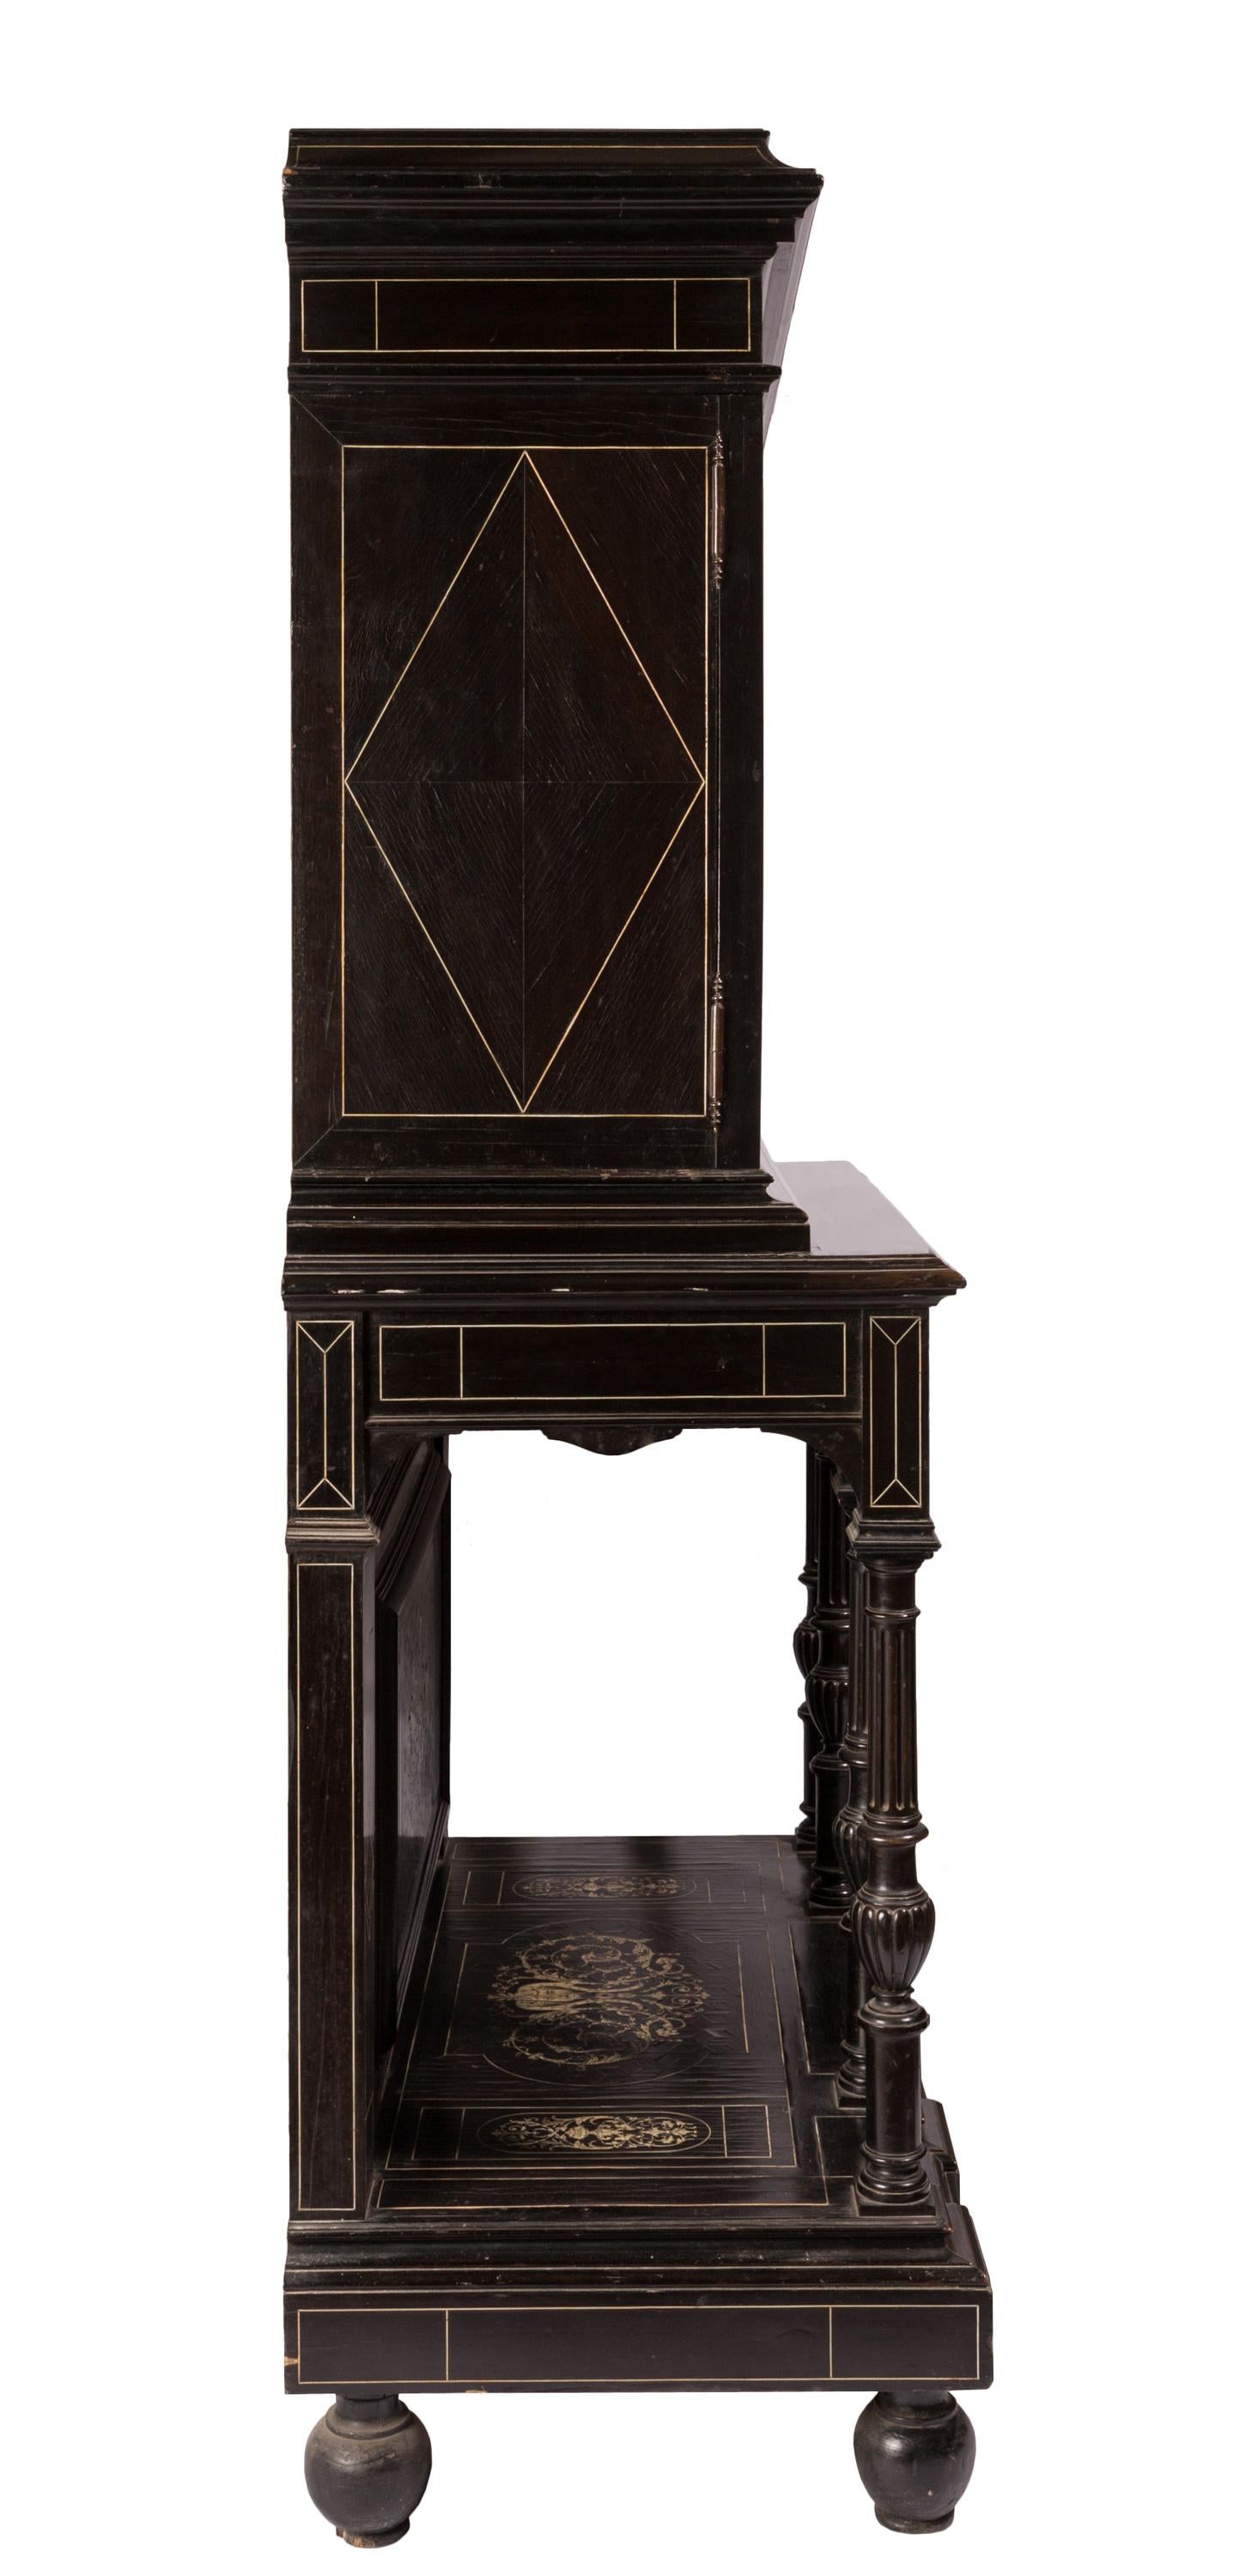 Other 19th Century Florentine Ebony with Bone Inlay Mannerist Cabinet